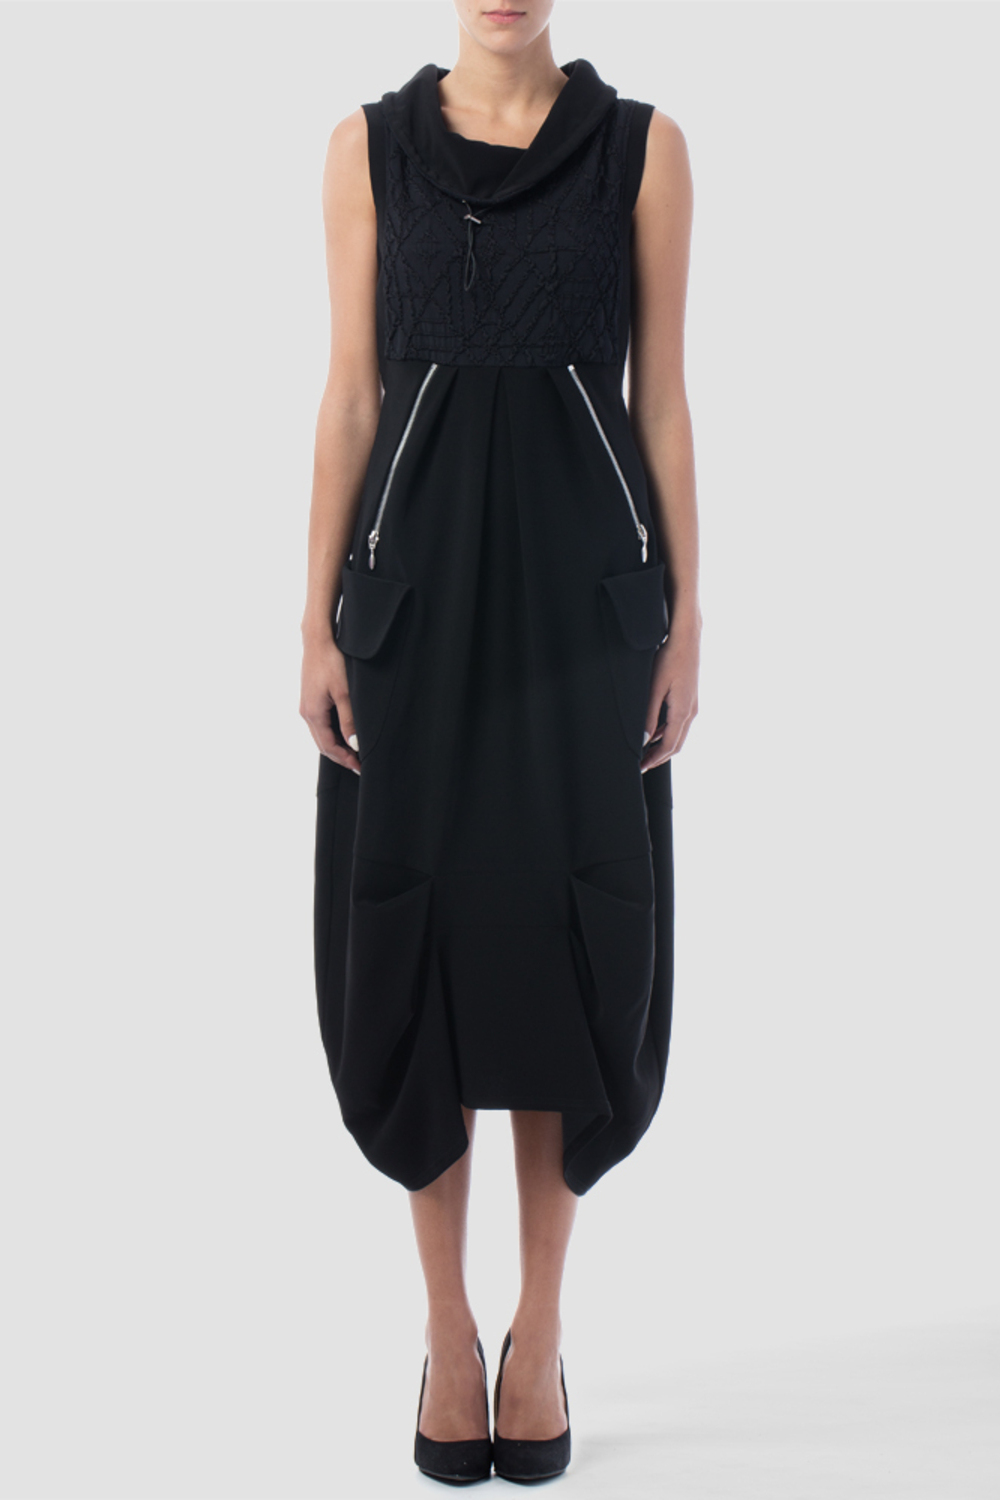 Joseph Ribkoff robe style 153879. Noir/noir